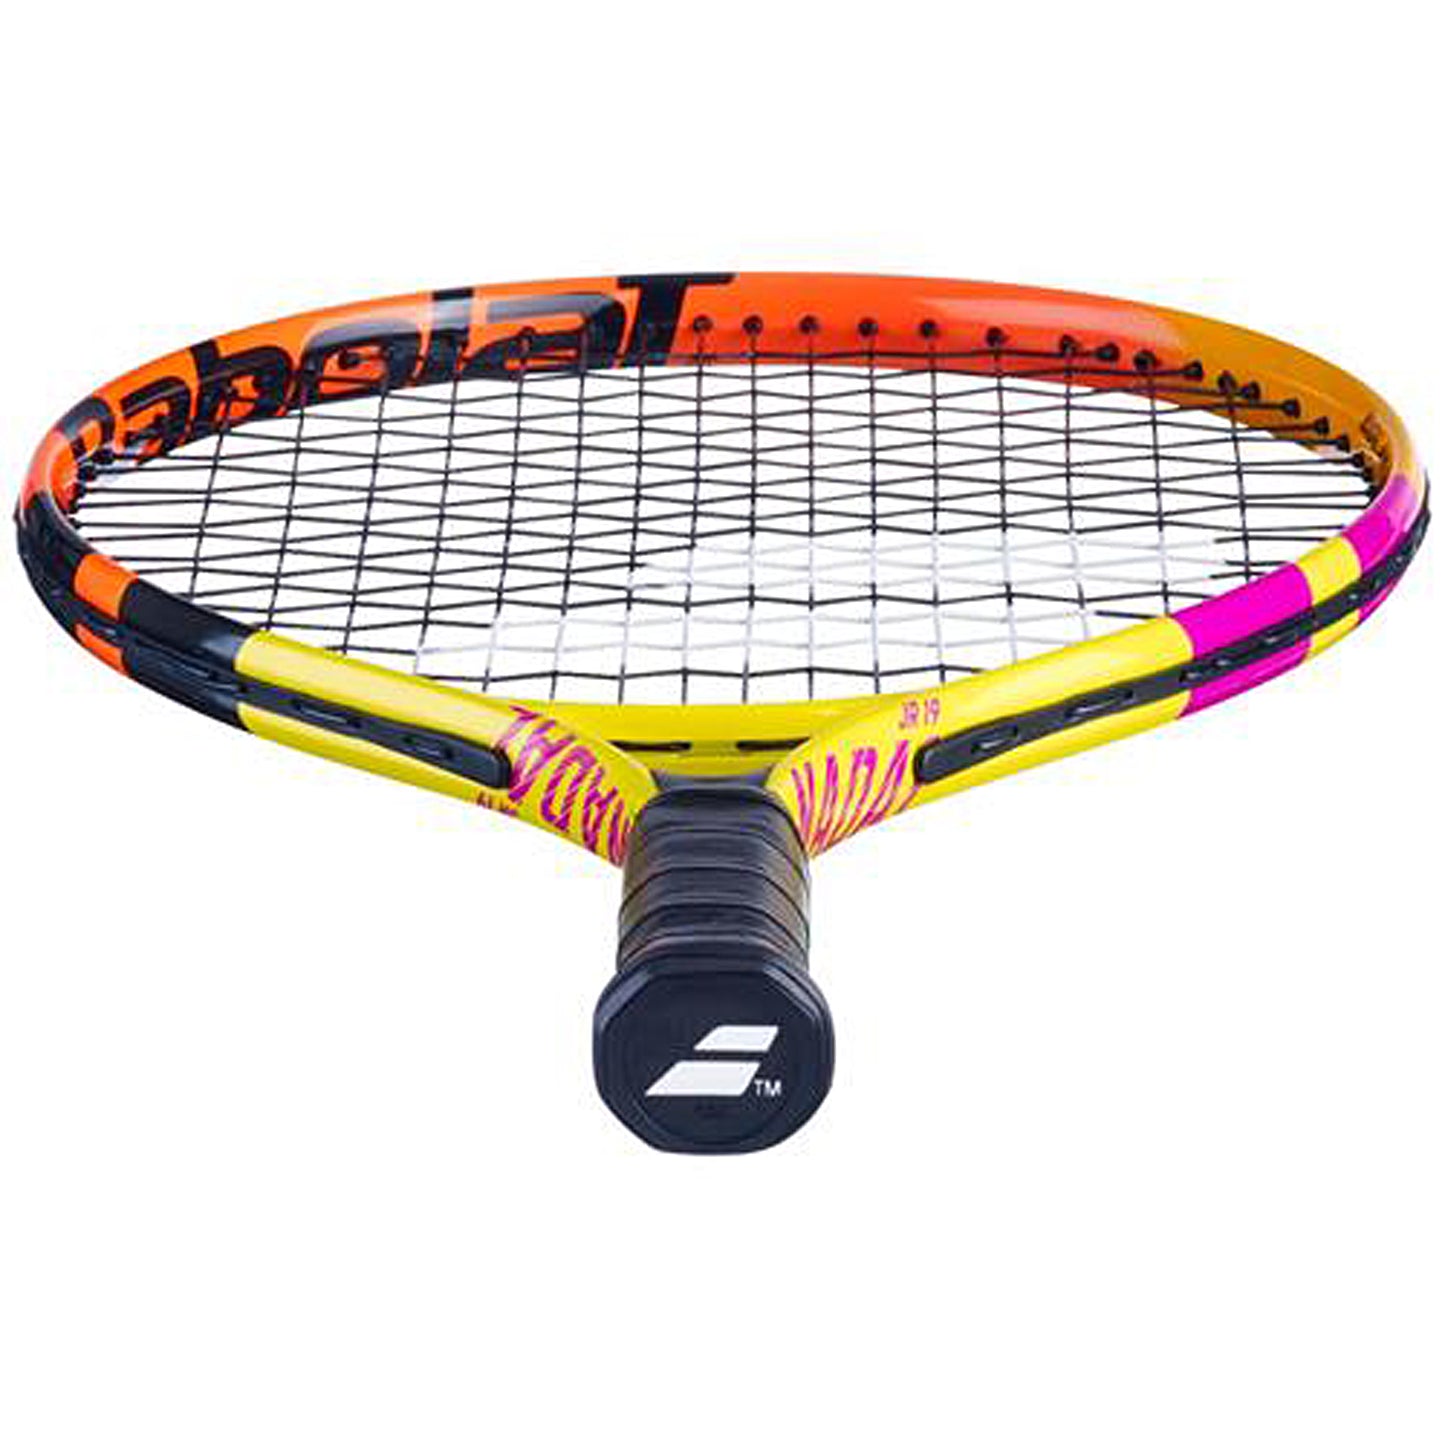 Babolat Nadal Junior 19 S CV Tennis Racquet - Best Price online Prokicksports.com